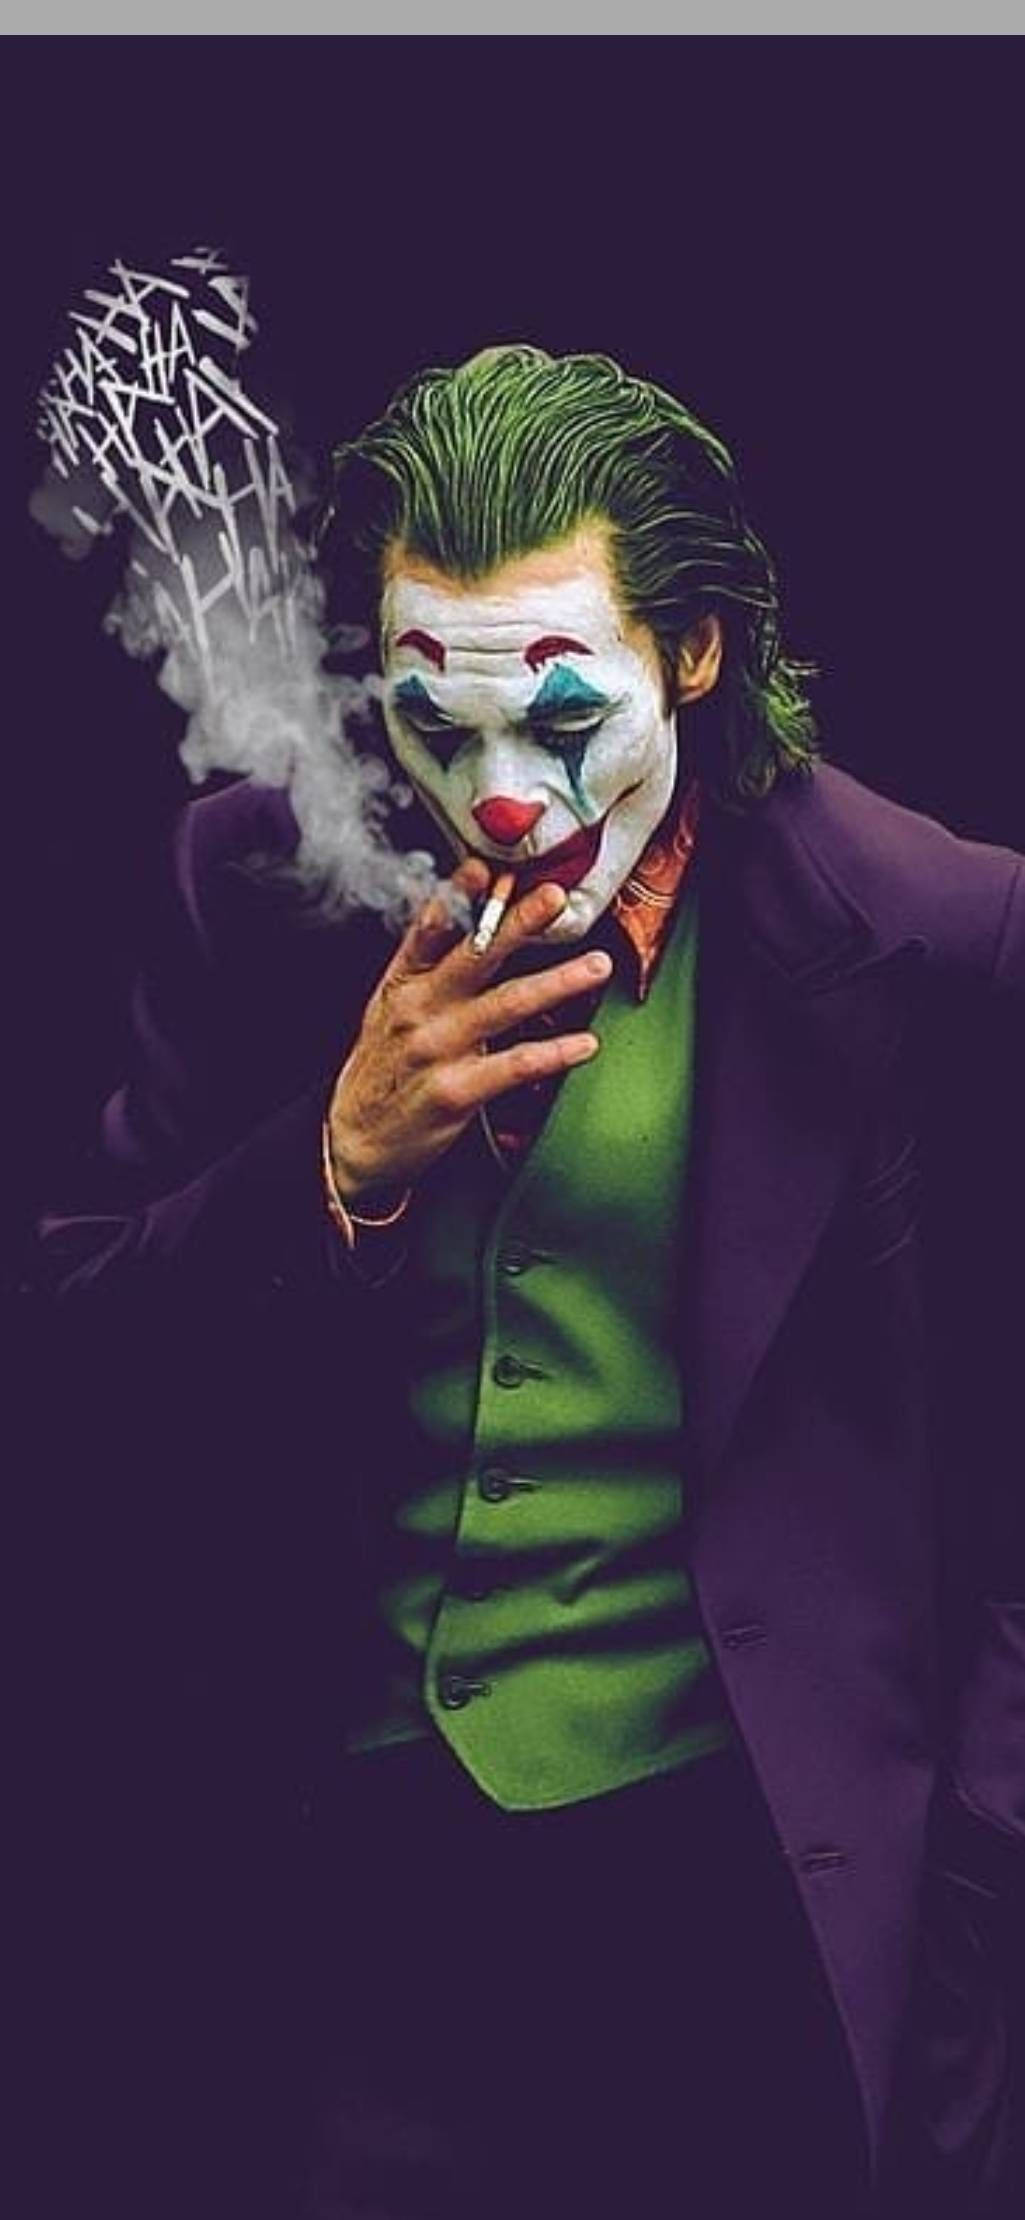 Joker 2019 Smoking On Purple Suit Background